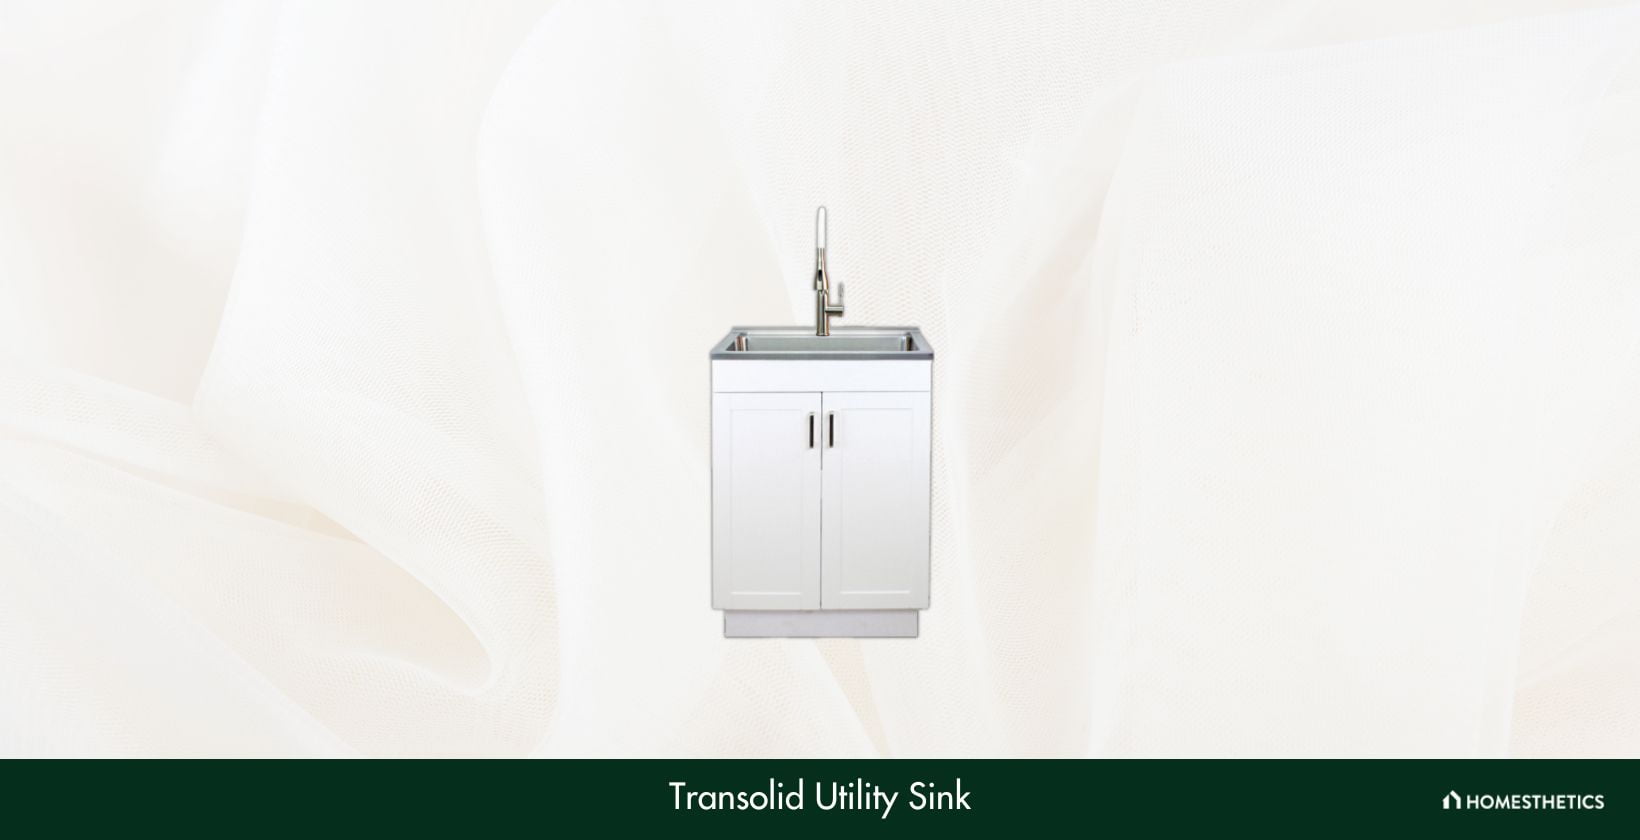 Transolid TCB 2420 WC Utility Sink